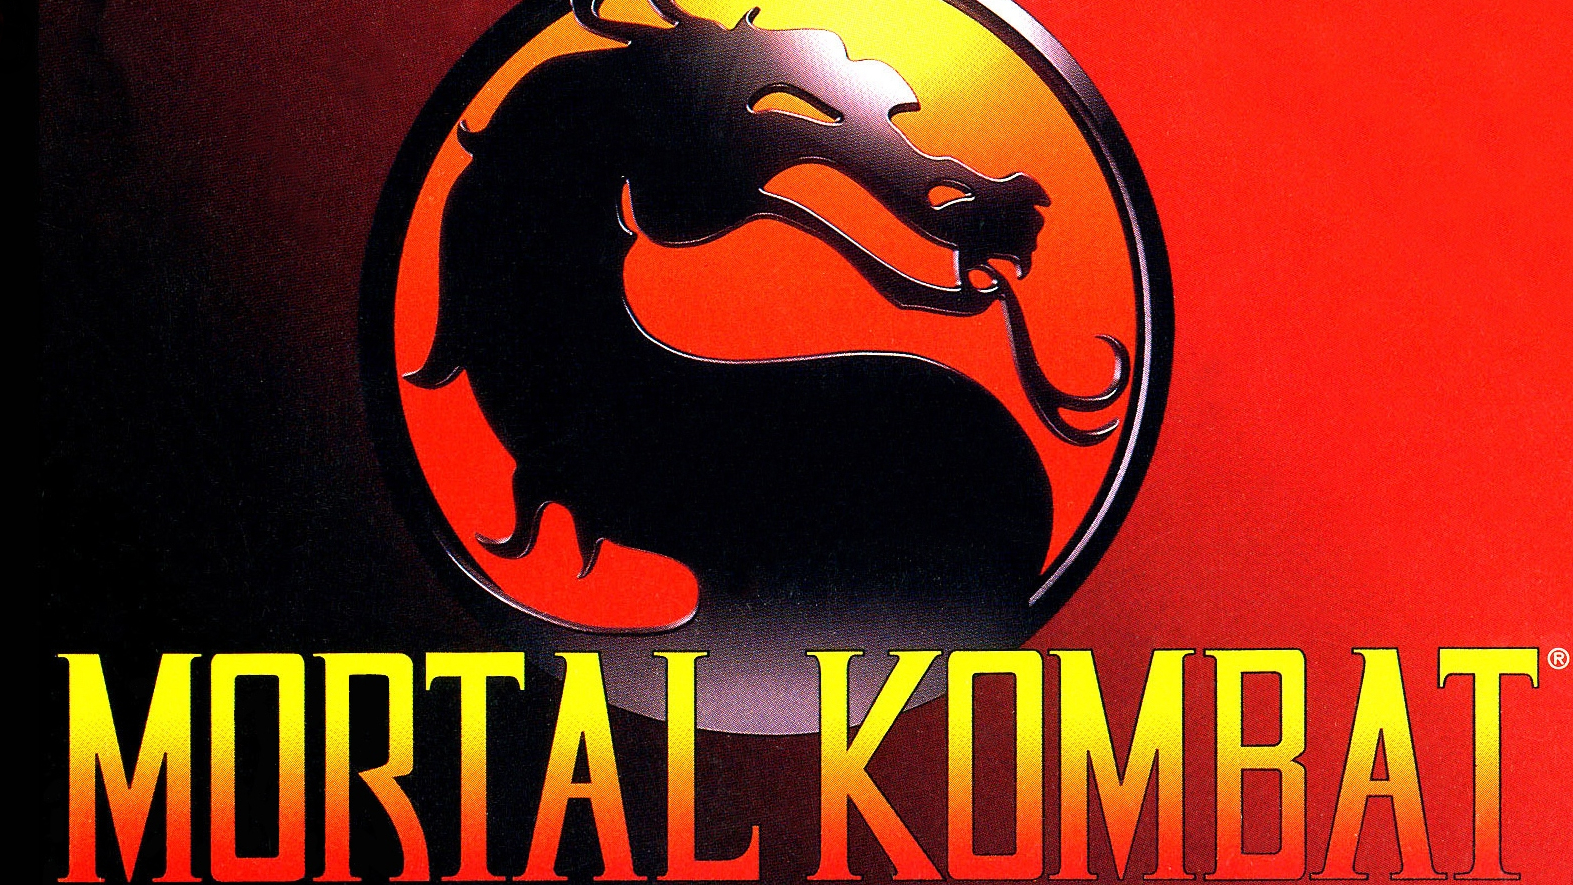 download mortal kombat games xbox one